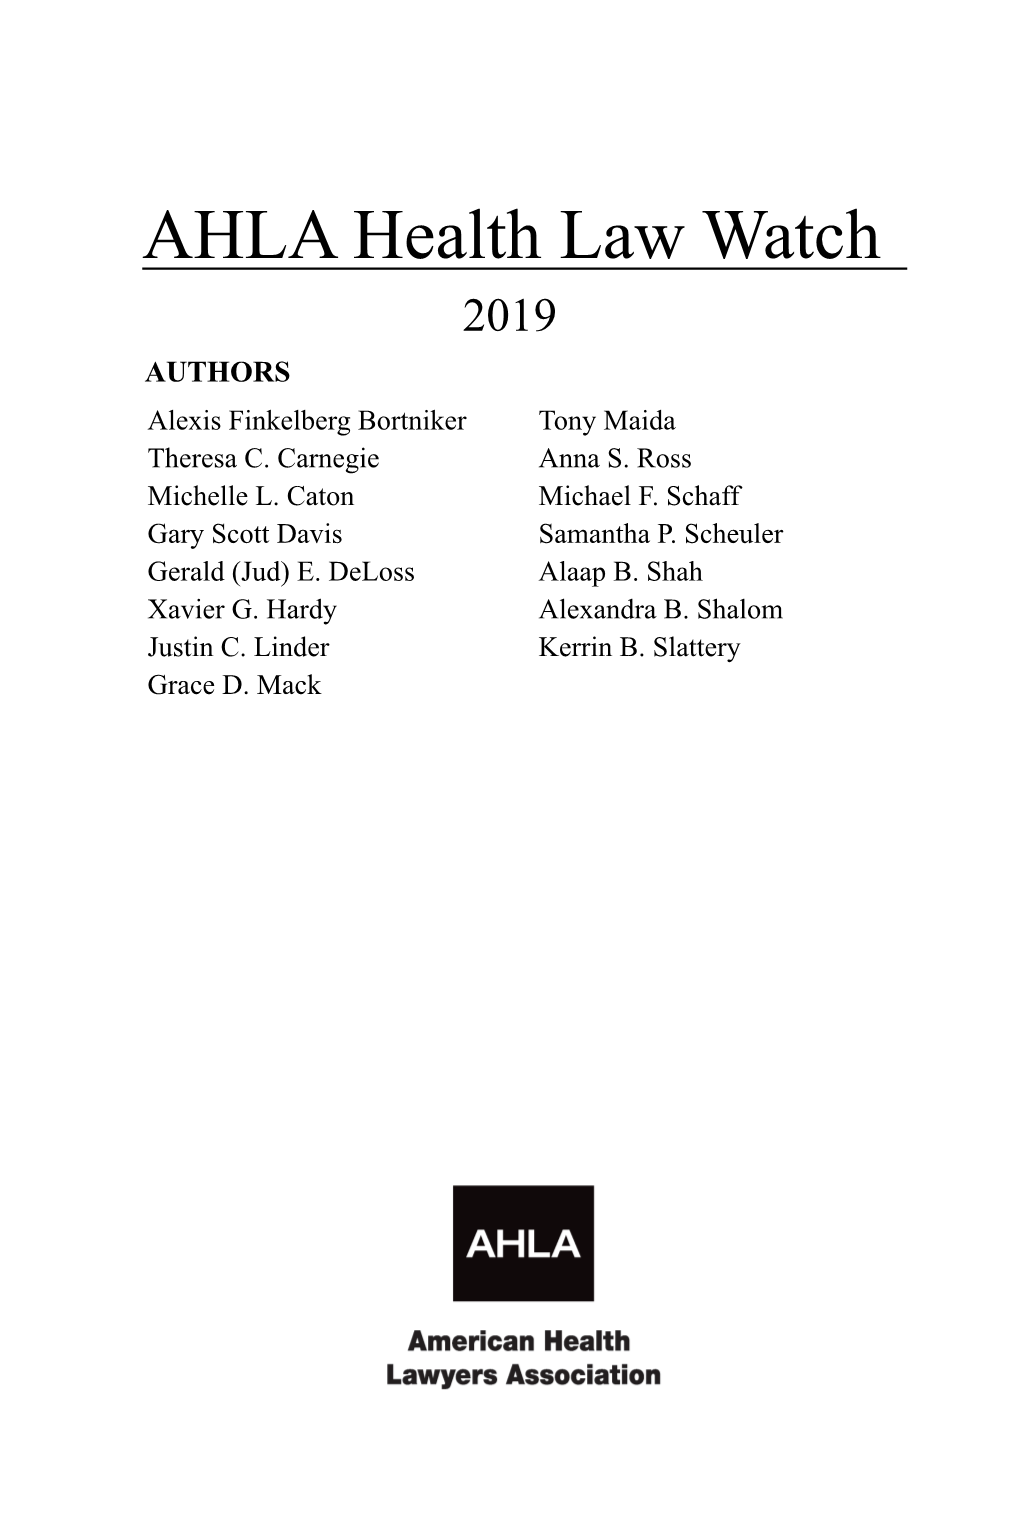 AHLA Health Law Watch 2019 AUTHORS Alexis Finkelberg Bortniker Tony Maida Theresa C